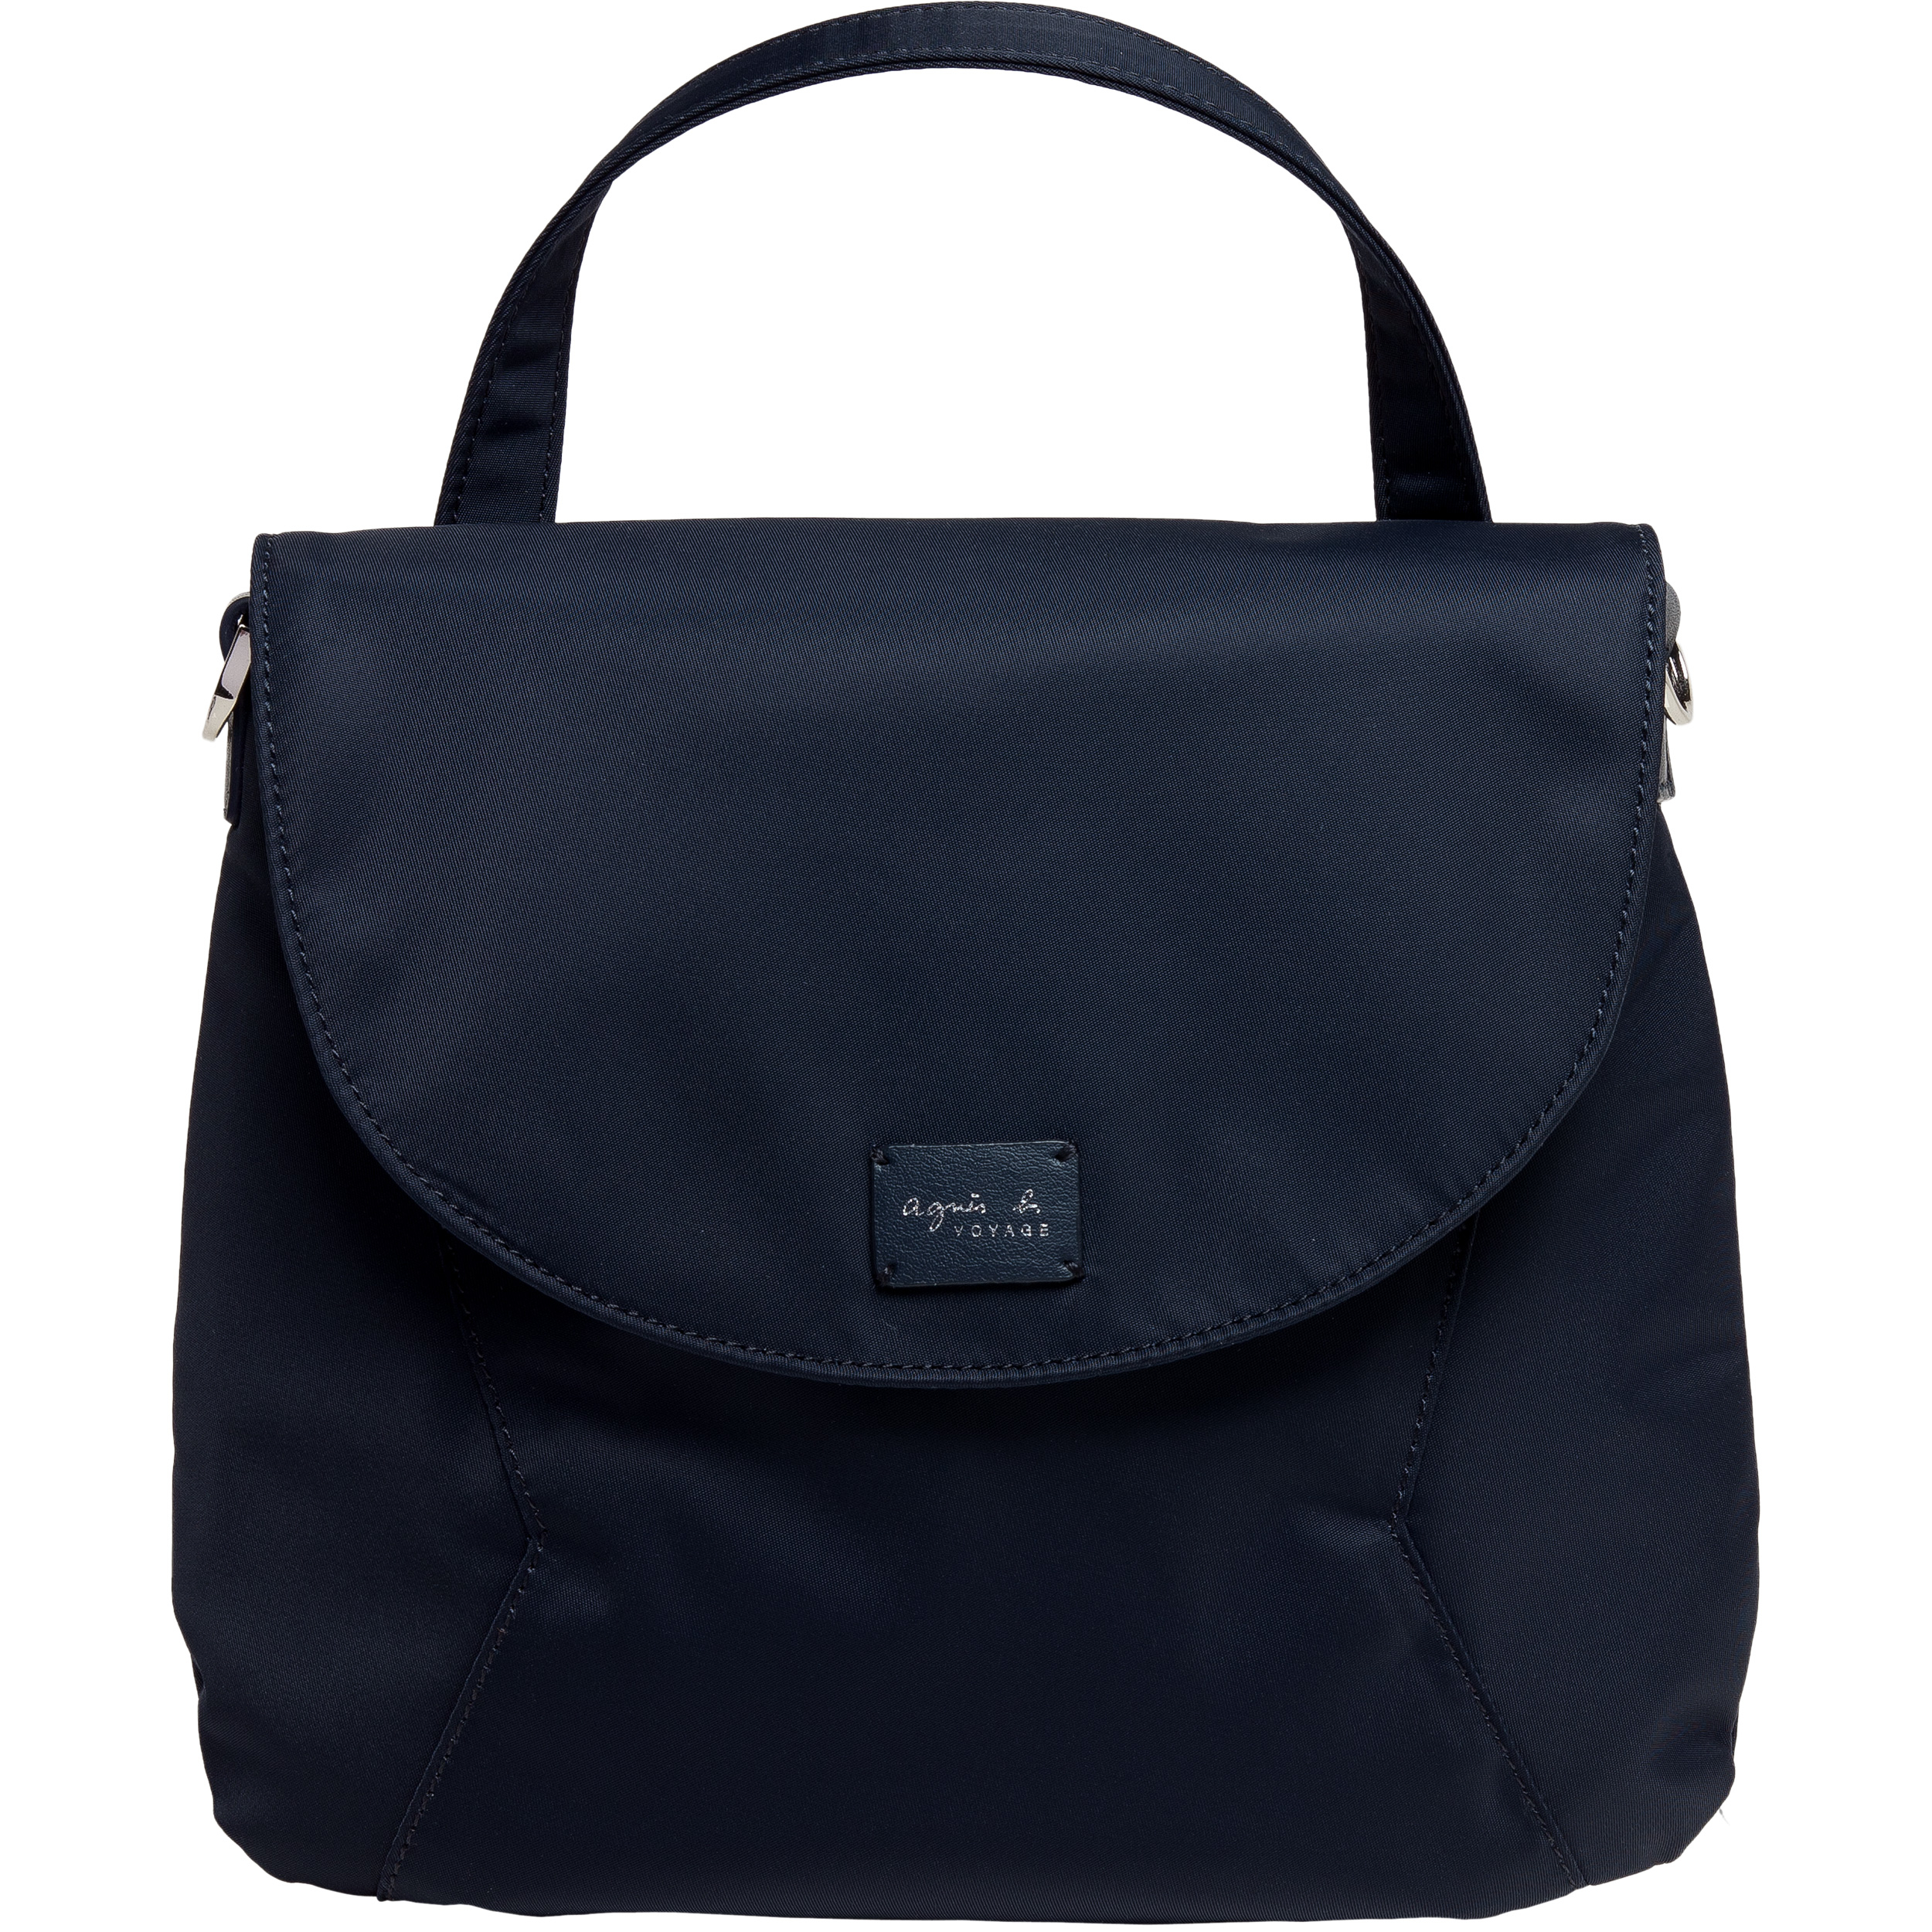 Lyst - Agnès B. Blue Handbag in Black